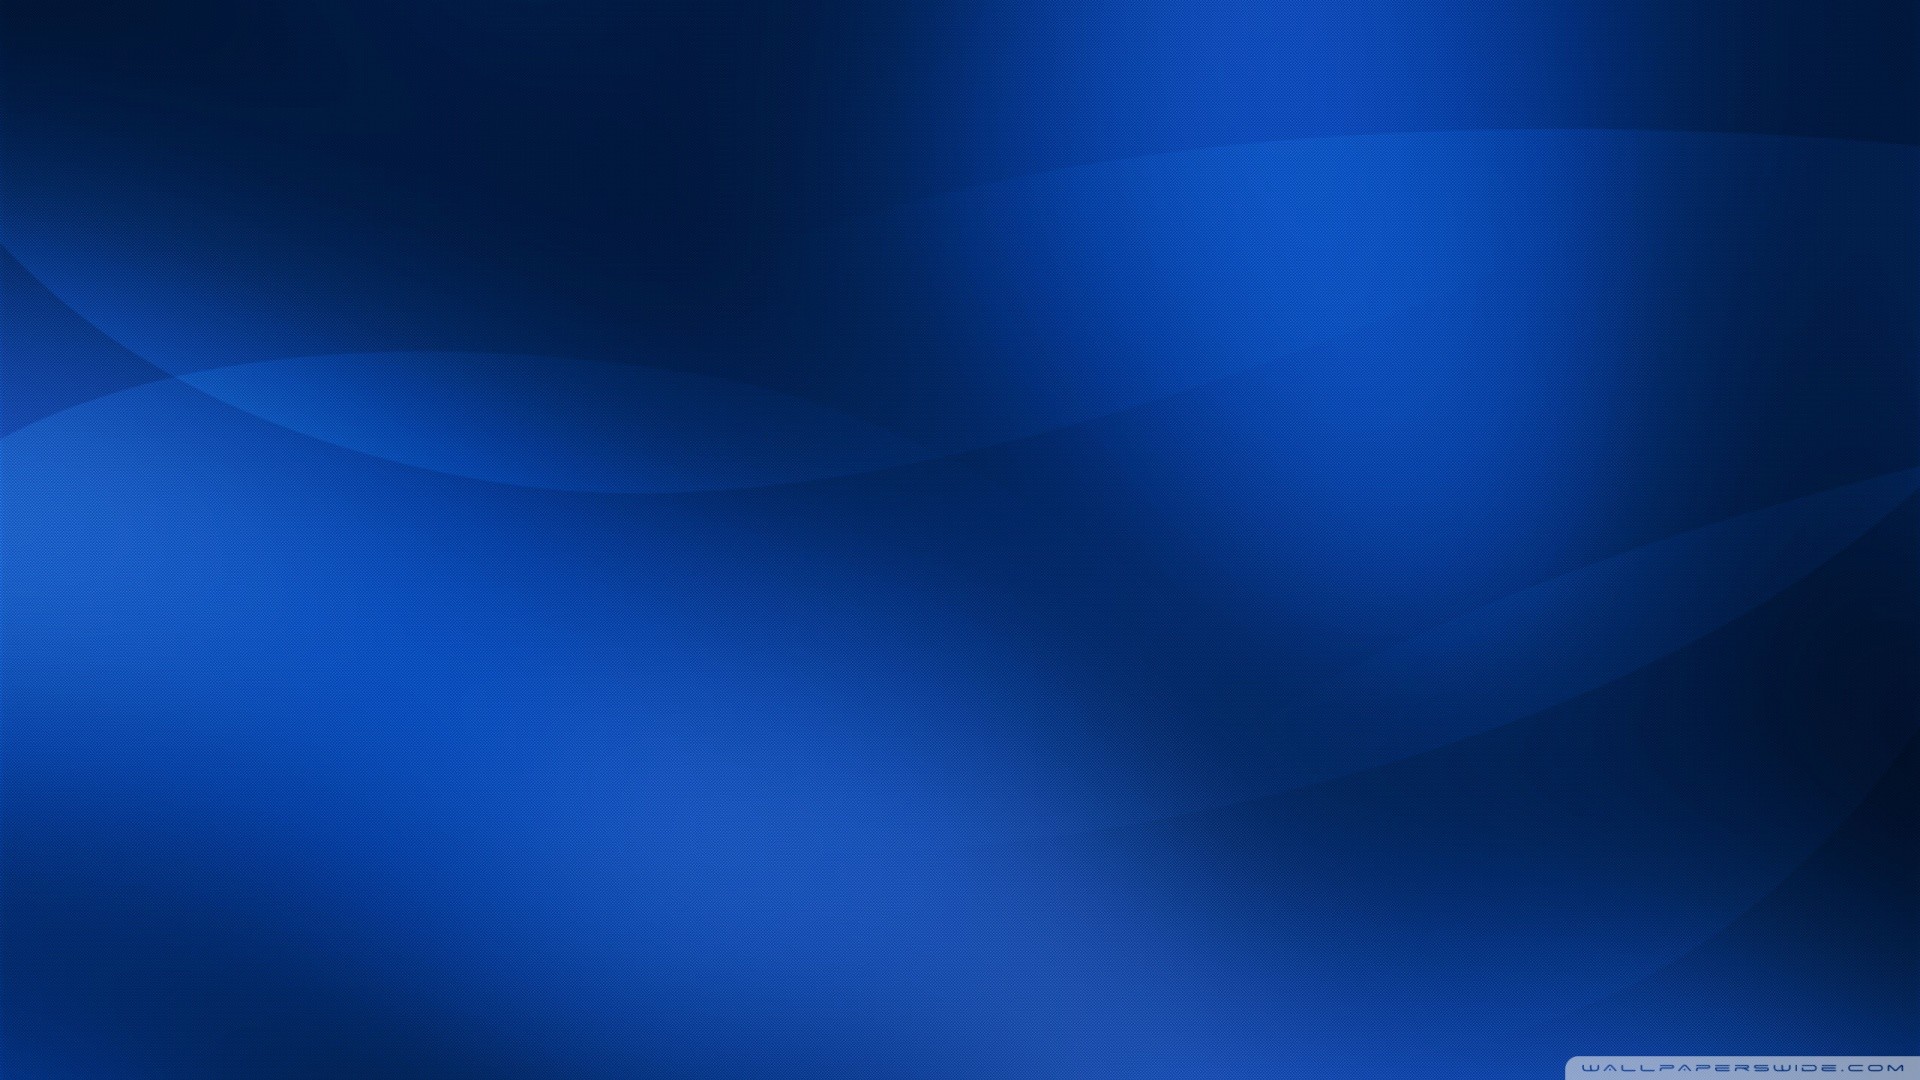 1920x1080, Blue Wallpaper 72 
 Data Id 4850 
 Data - Abstract Dark Blue Gradient Background - HD Wallpaper 